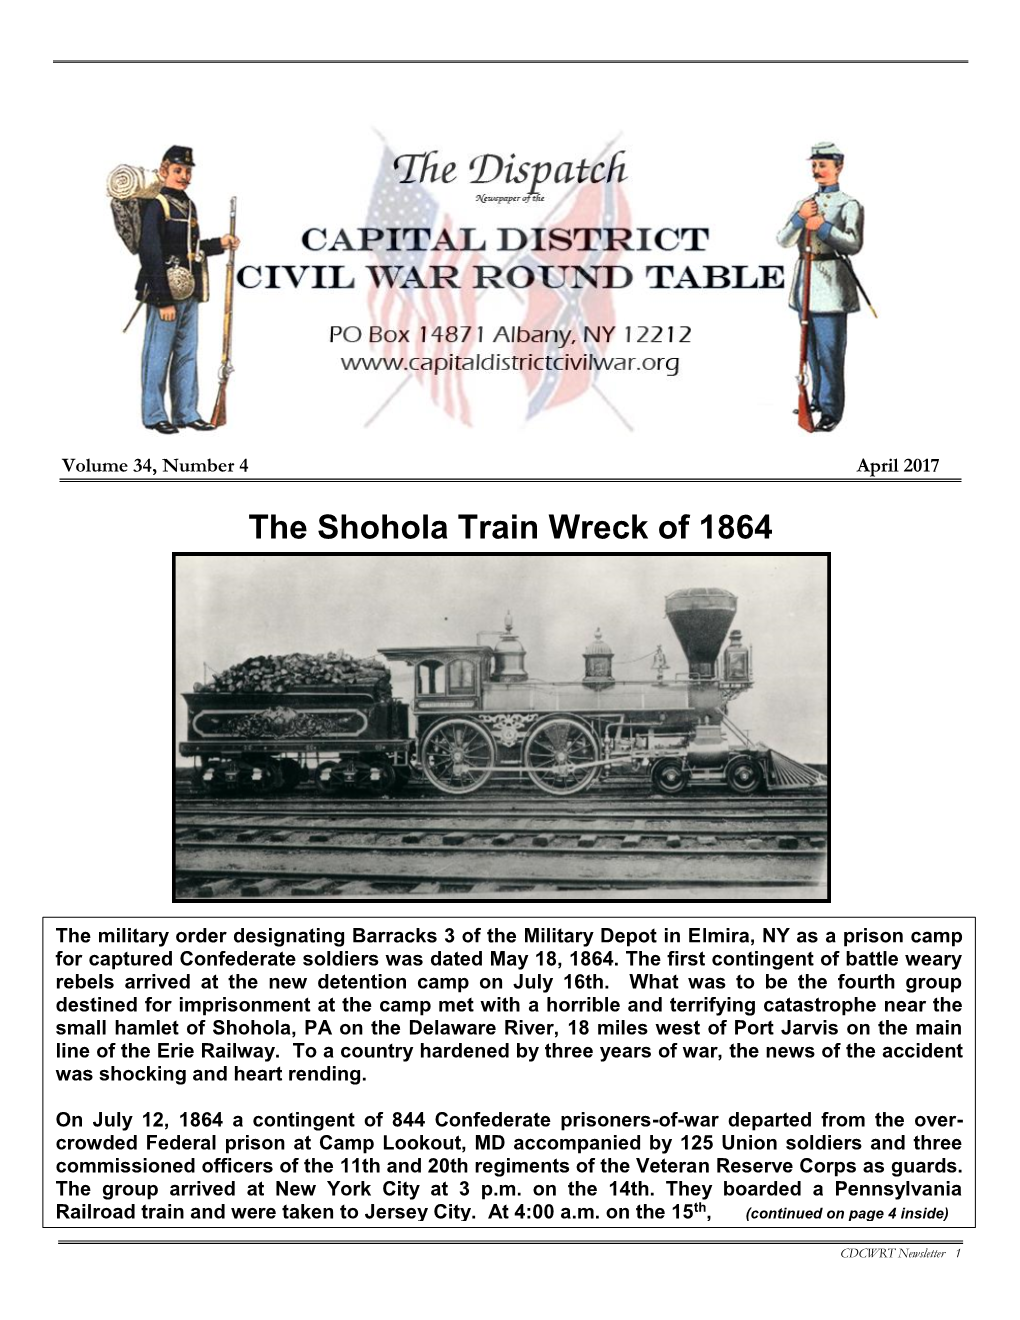 The Shohola Train Wreck of 1864